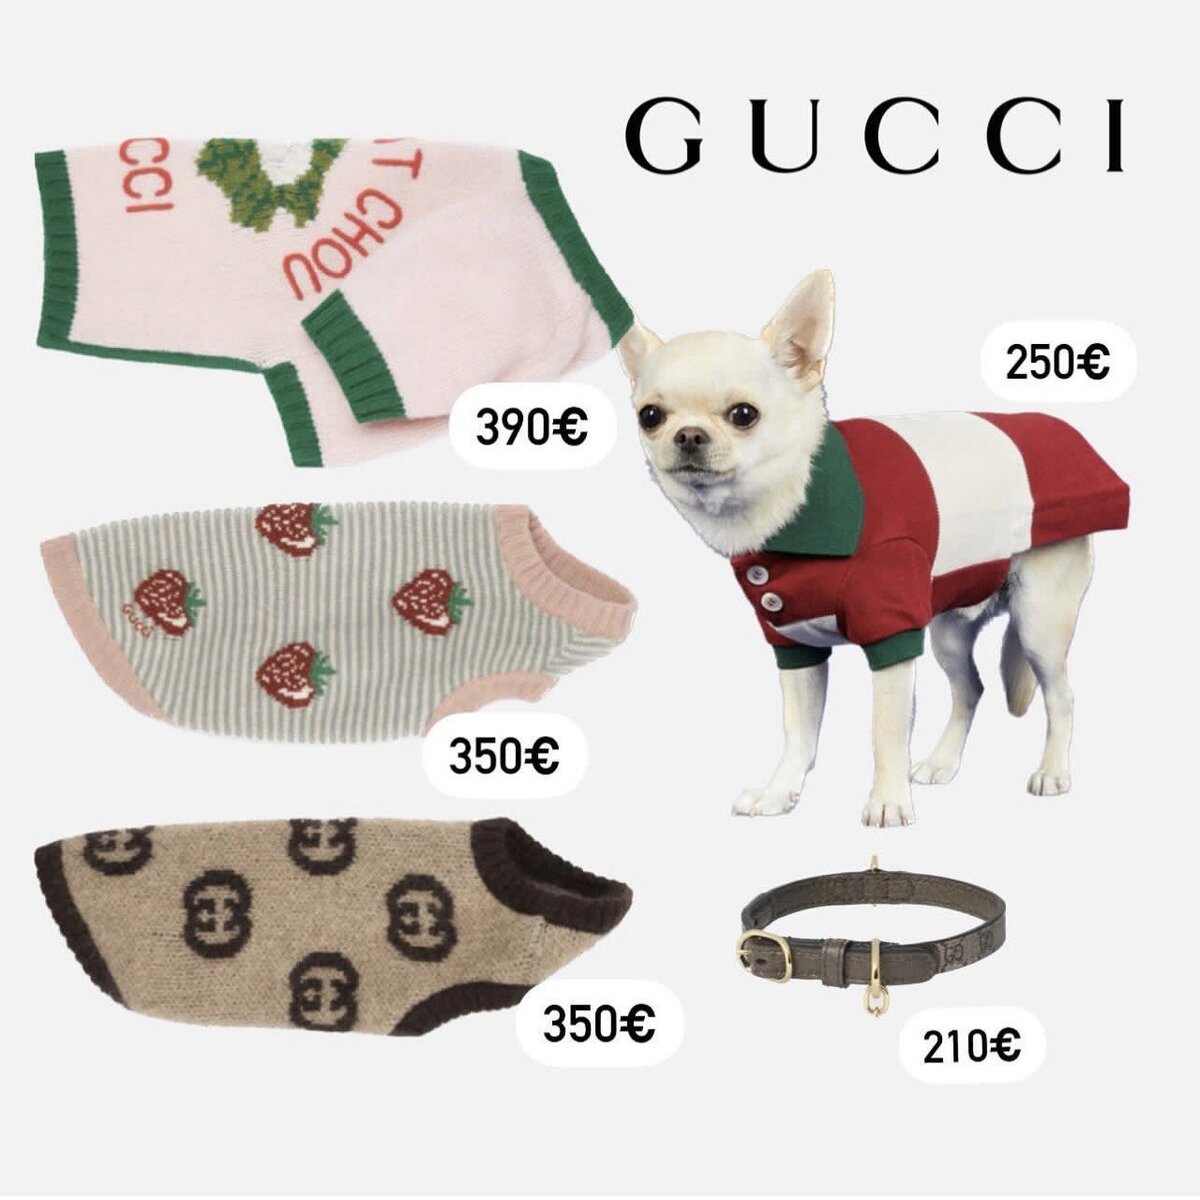 Gucci одежда для собак коллаж